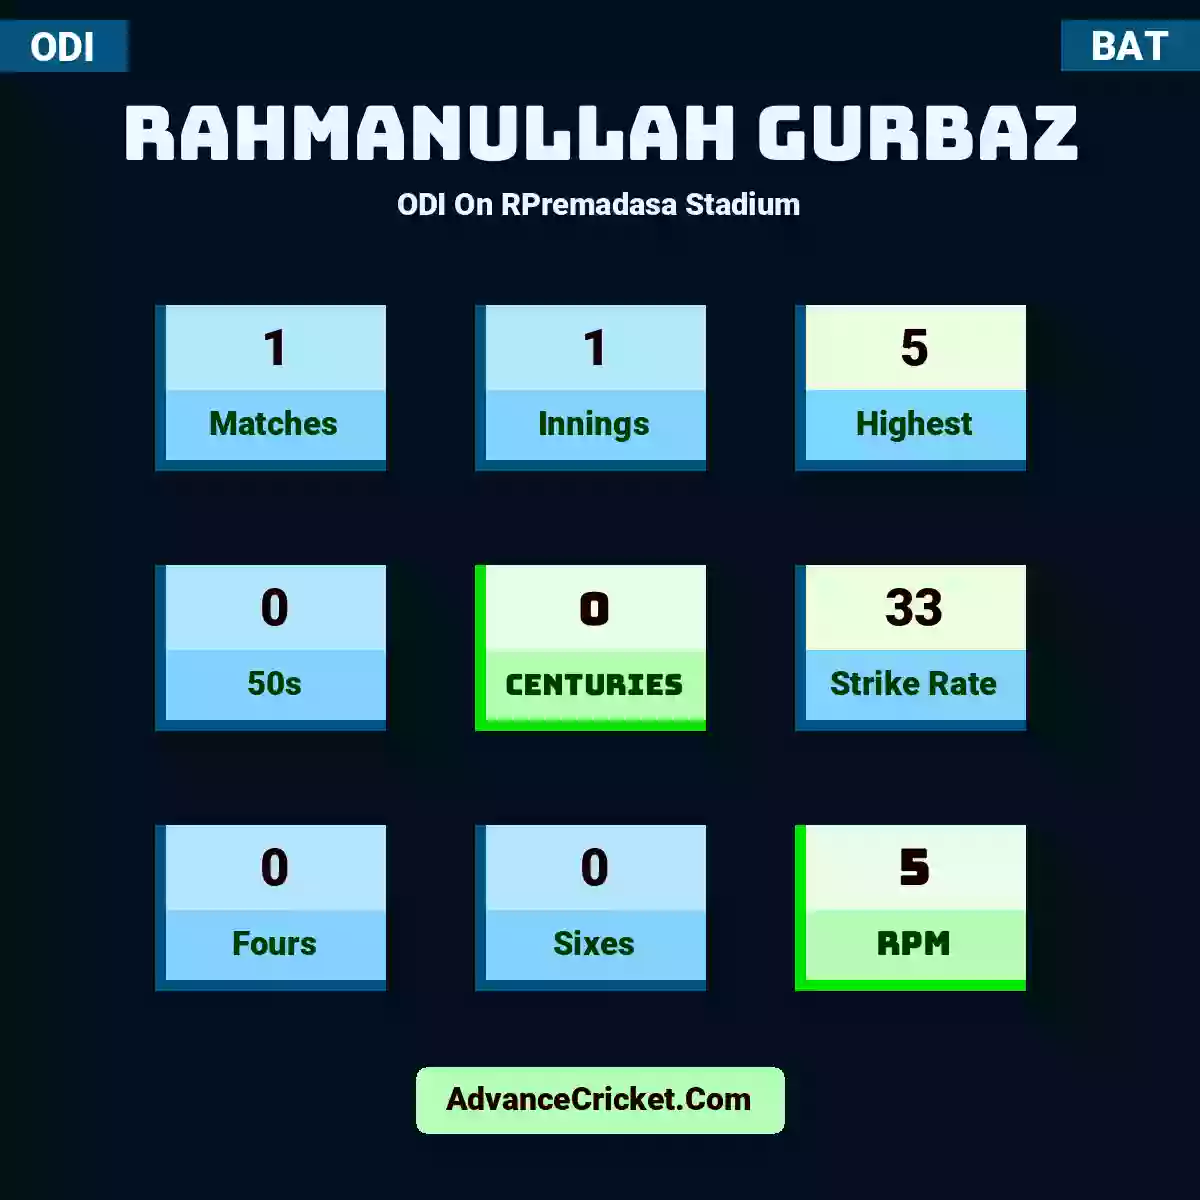 Rahmanullah Gurbaz ODI  On RPremadasa Stadium, Rahmanullah Gurbaz played 1 matches, scored 5 runs as highest, 0 half-centuries, and 0 centuries, with a strike rate of 33. R.Gurbaz hit 0 fours and 0 sixes, with an RPM of 5.